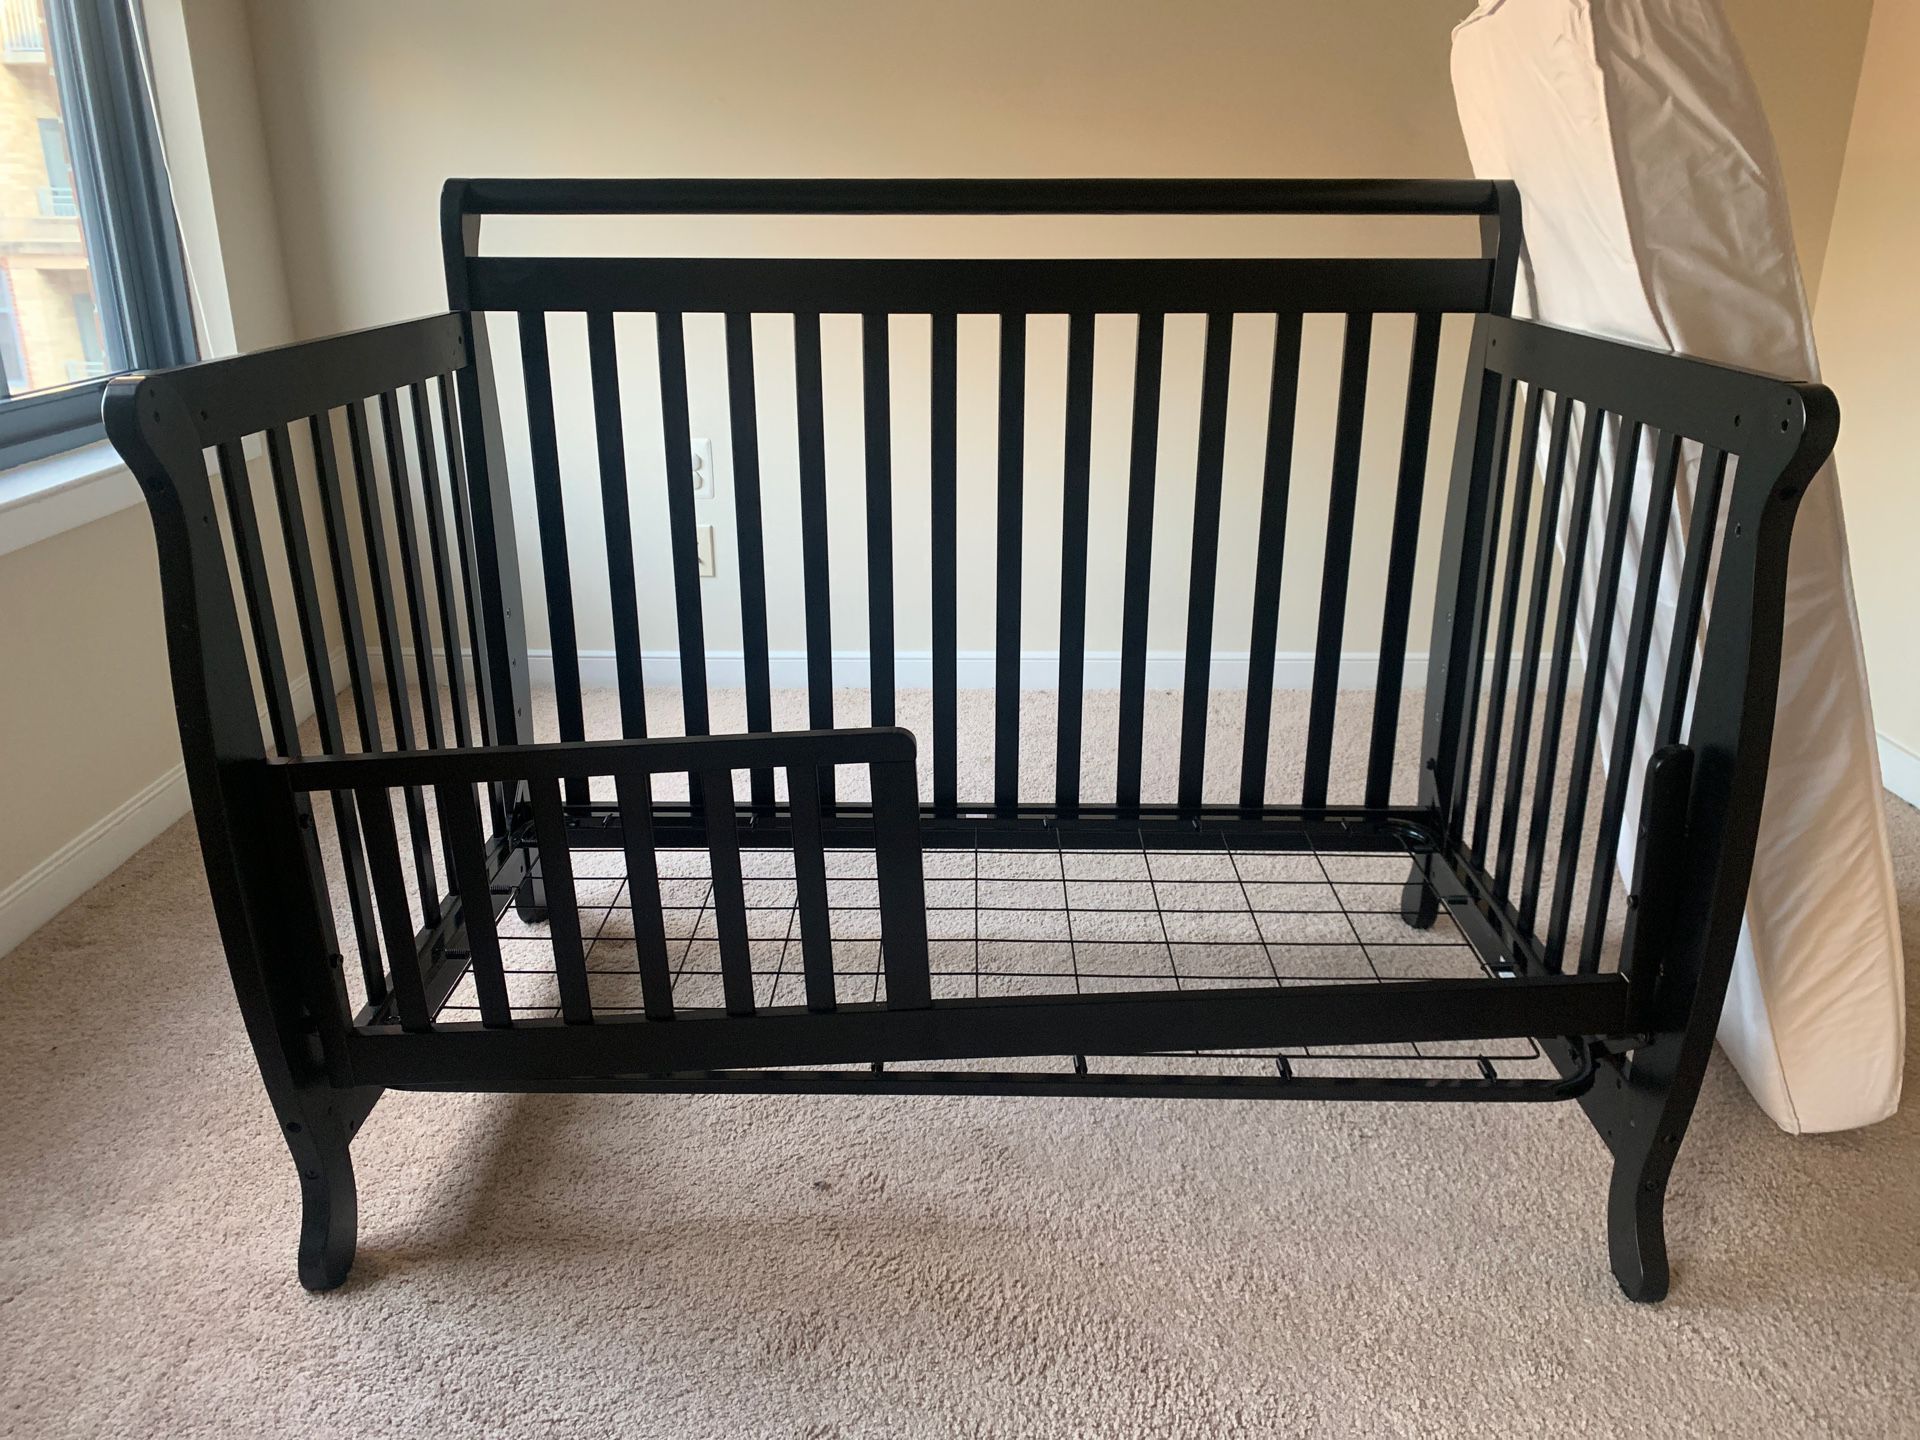 Baby convertible crib w/ mattress